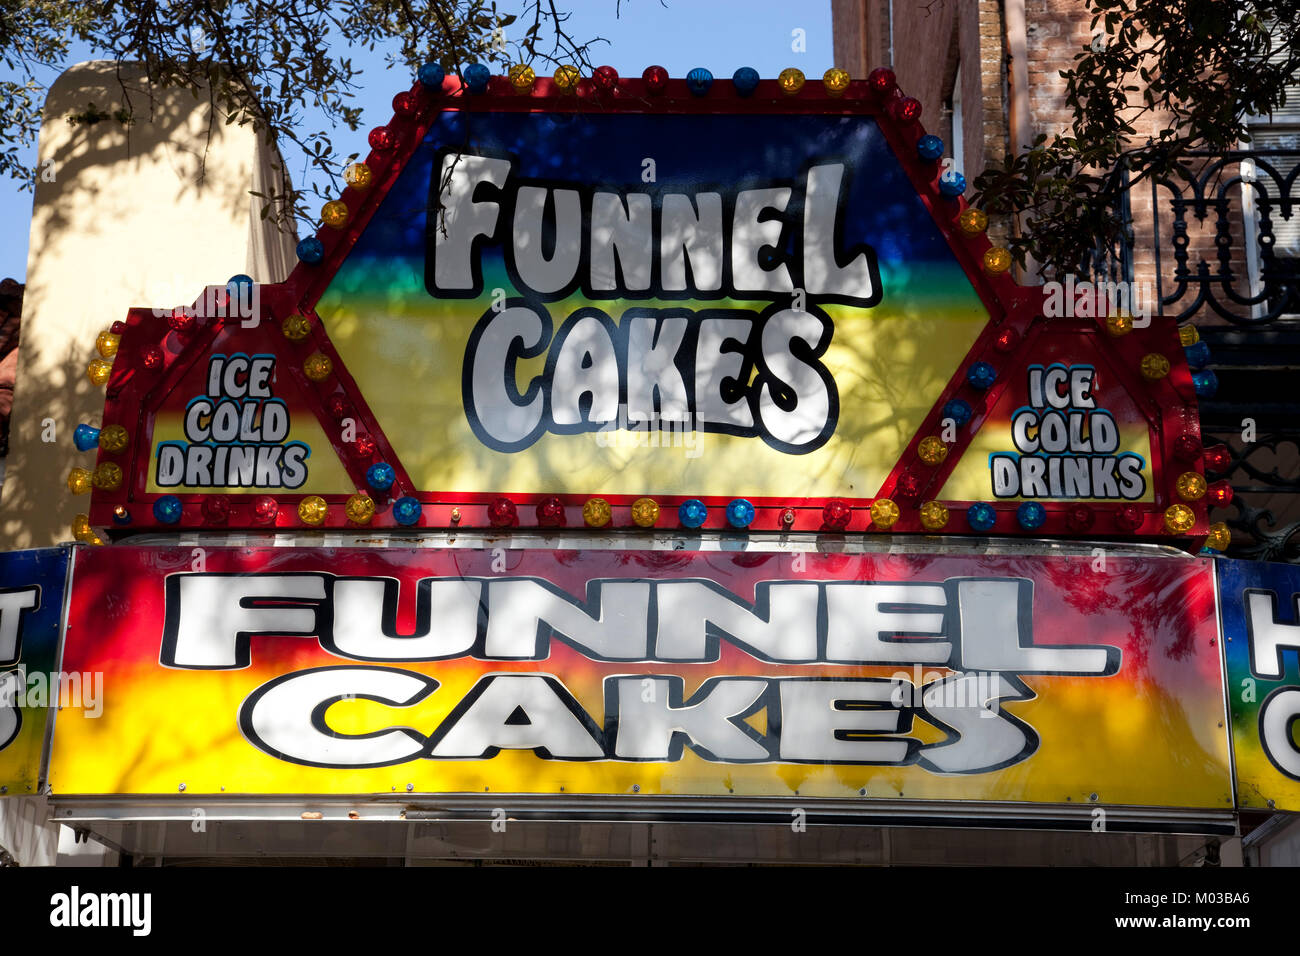 Funnel cakes for Mardi Gras celebration Stock Photo